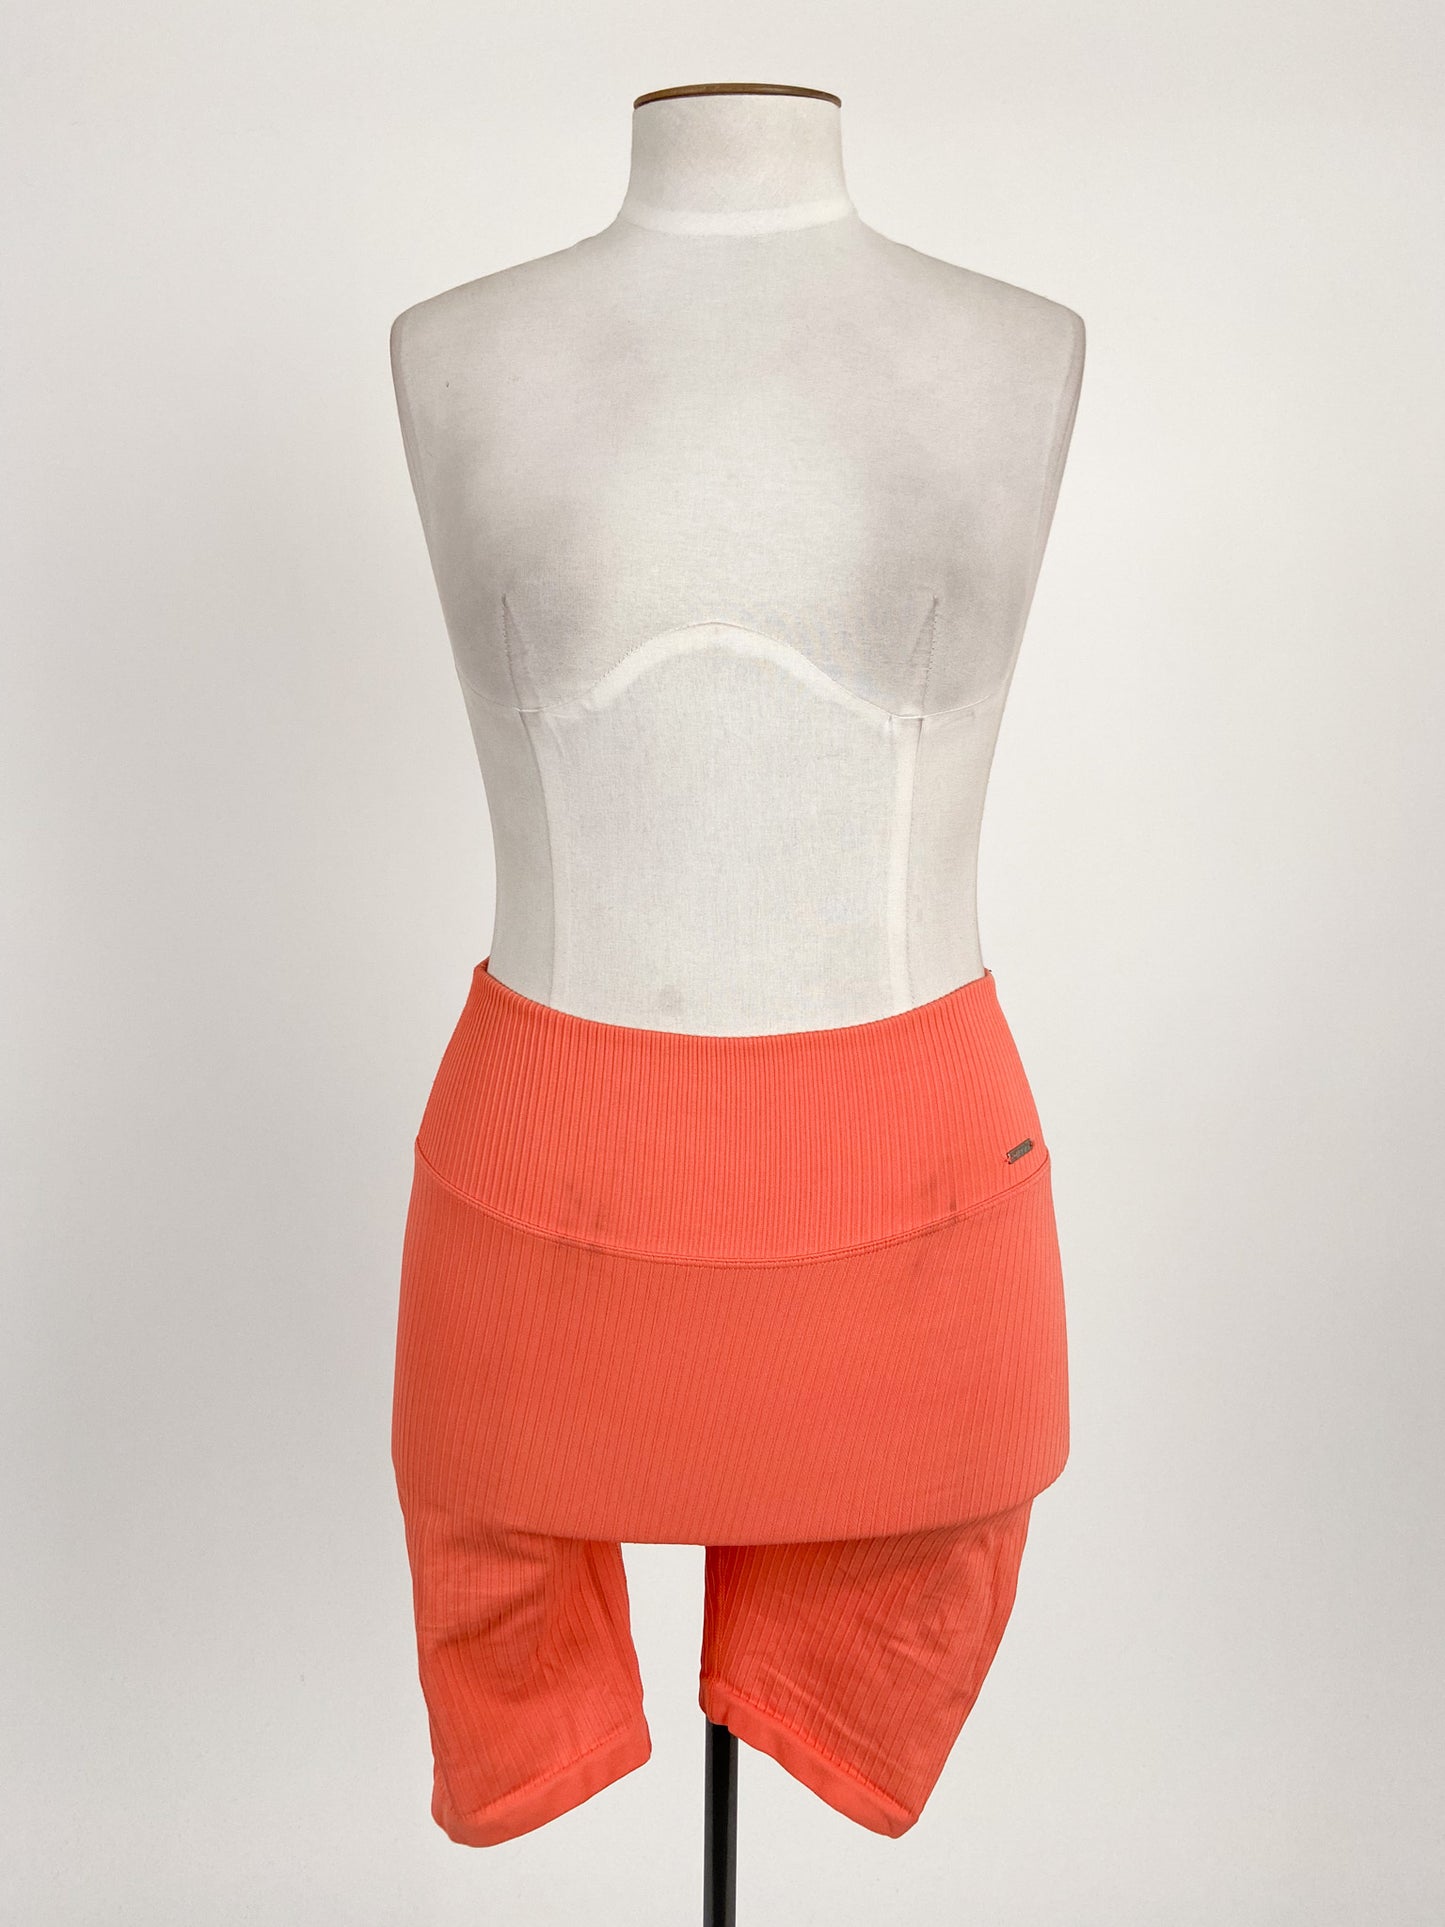 Aim'n | Orange Casual Activewear Bottom | Size M